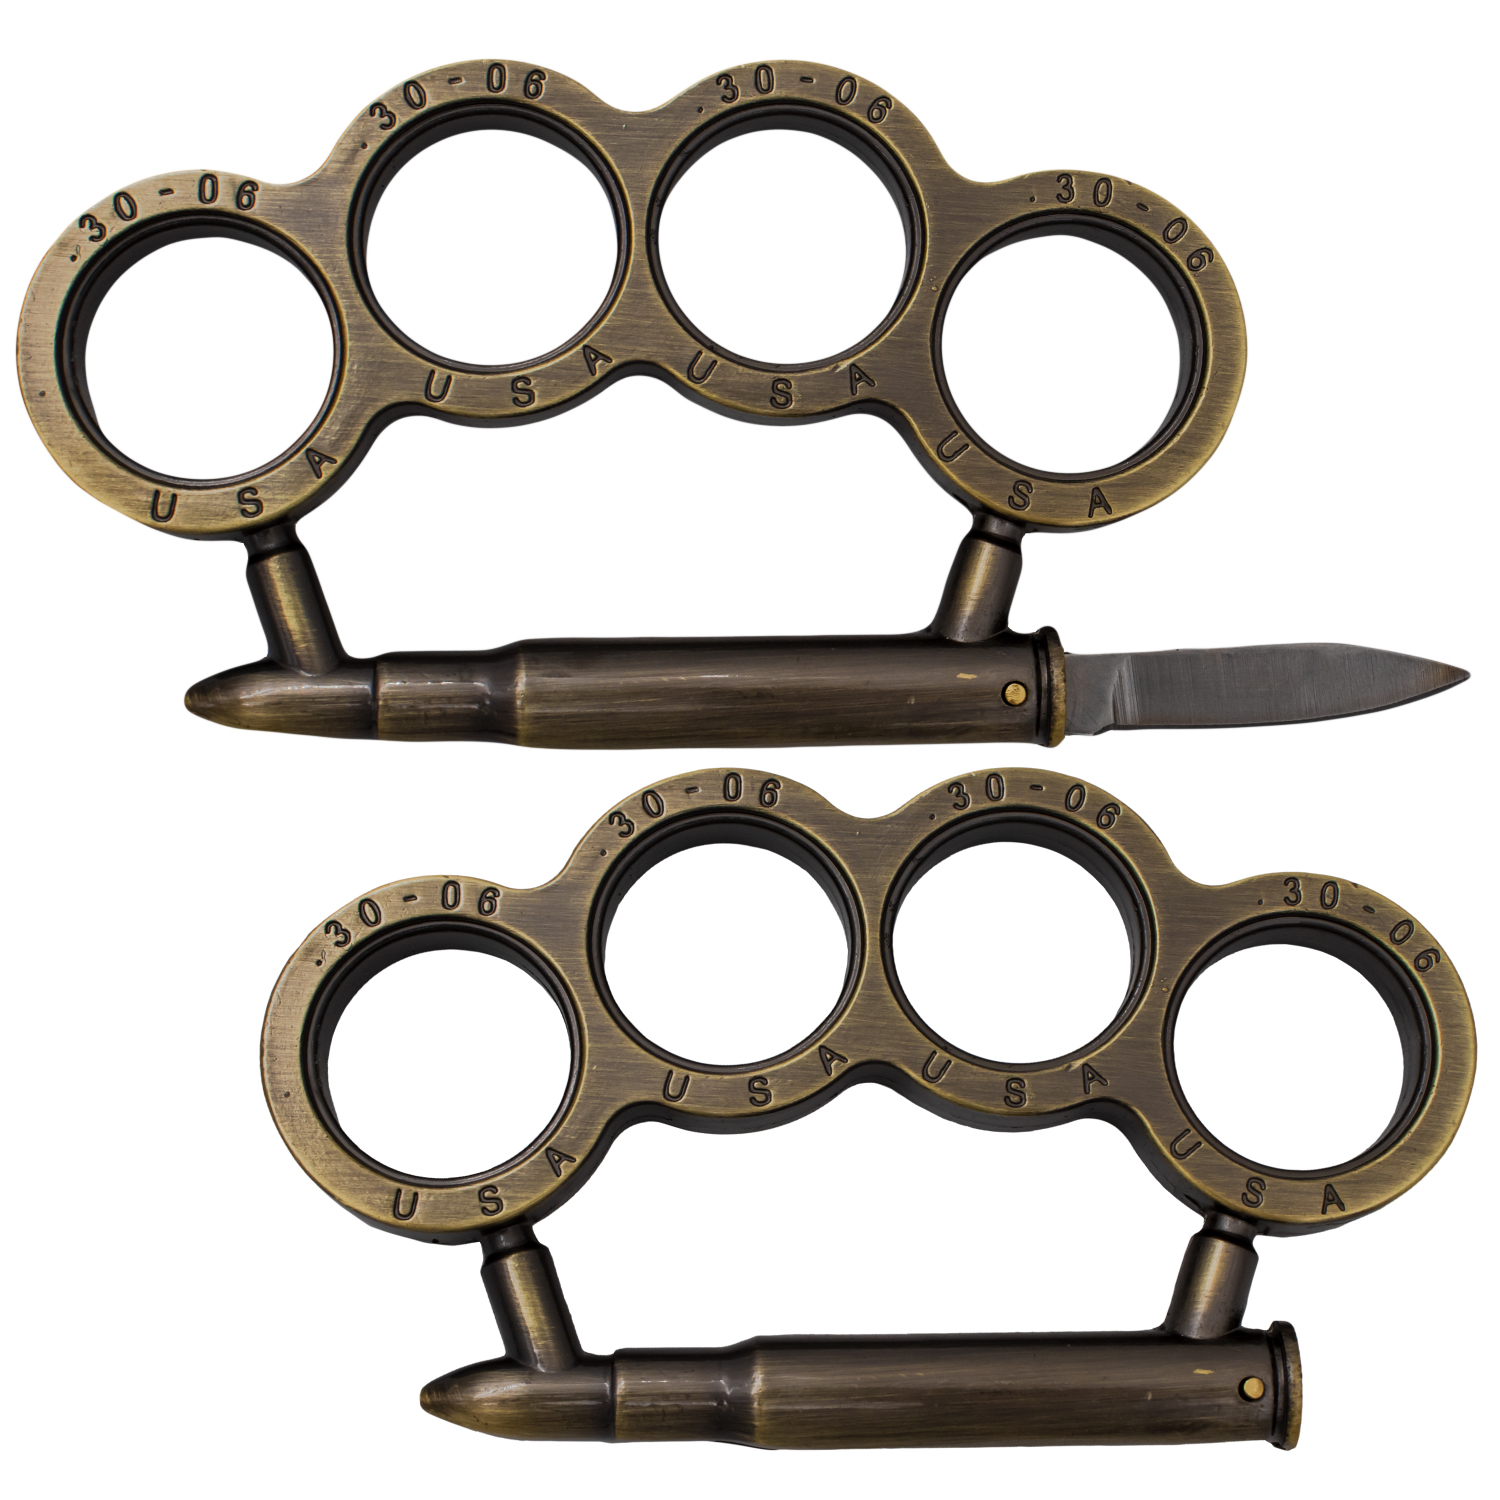 30 06 Caliber Bullet Brass Knuckle with Folding Knife